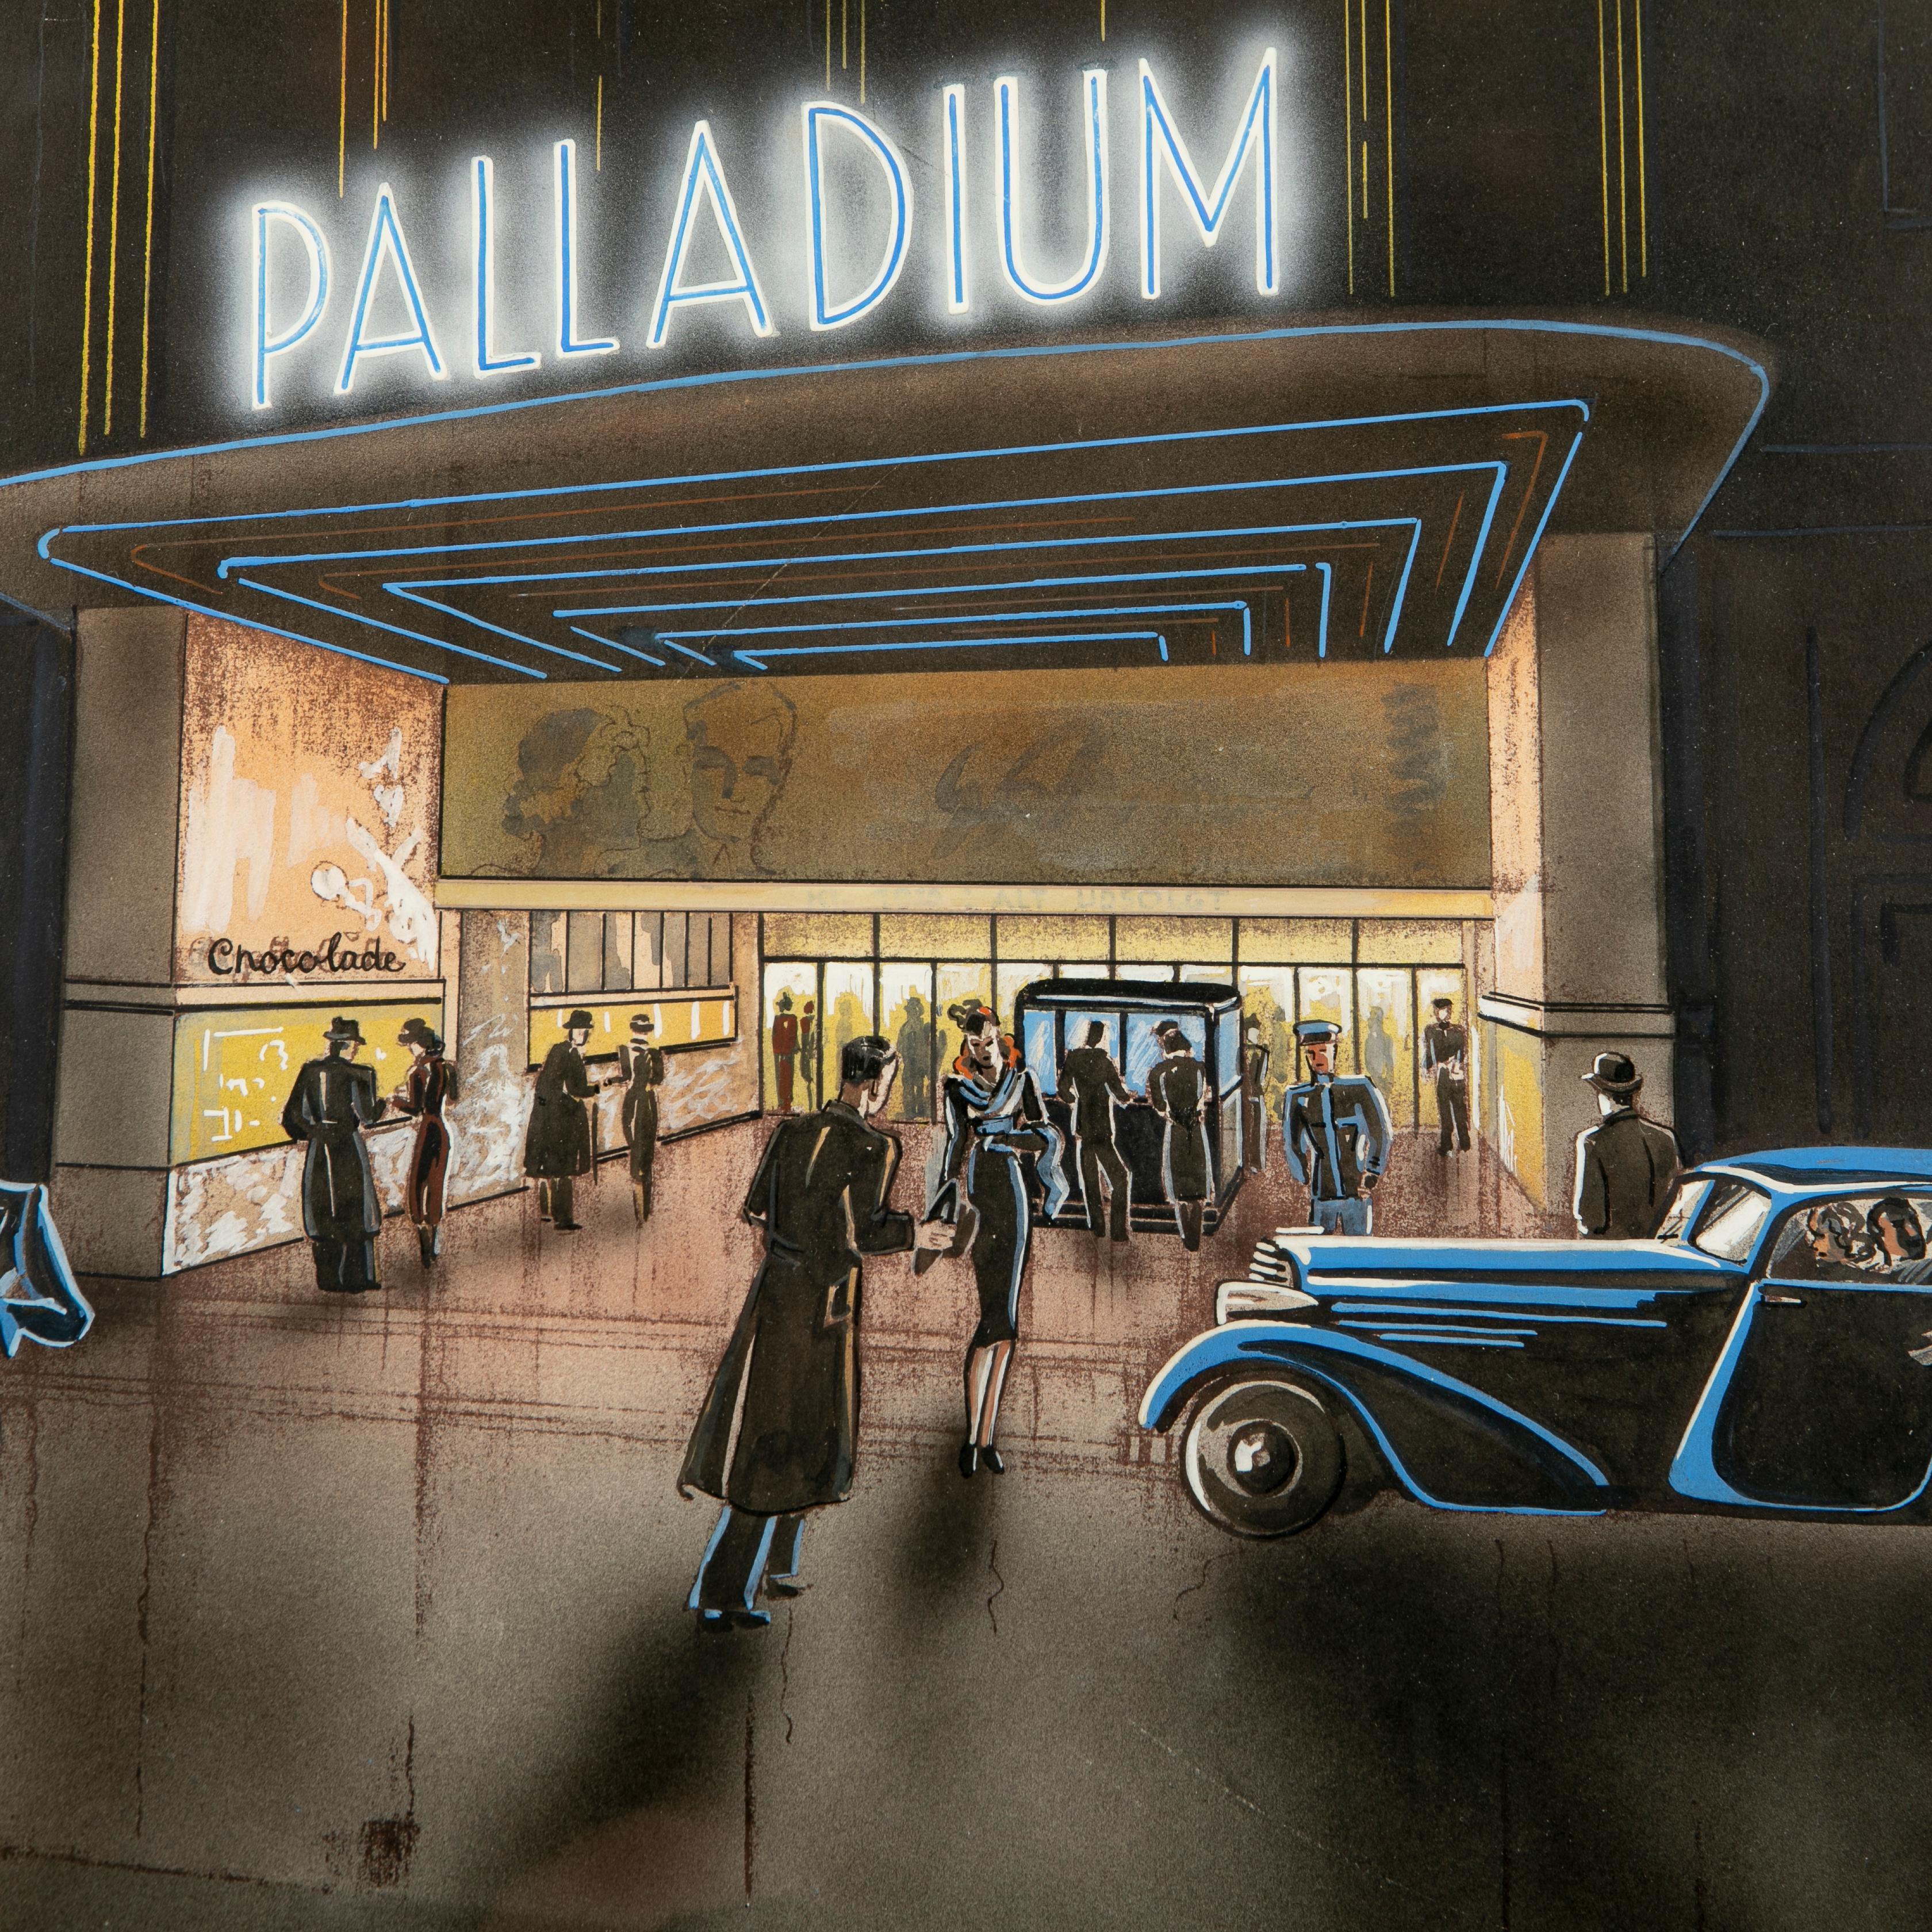 Original Art Deco Poster of the Palladium Cinema by Svend Koppel For Sale 2